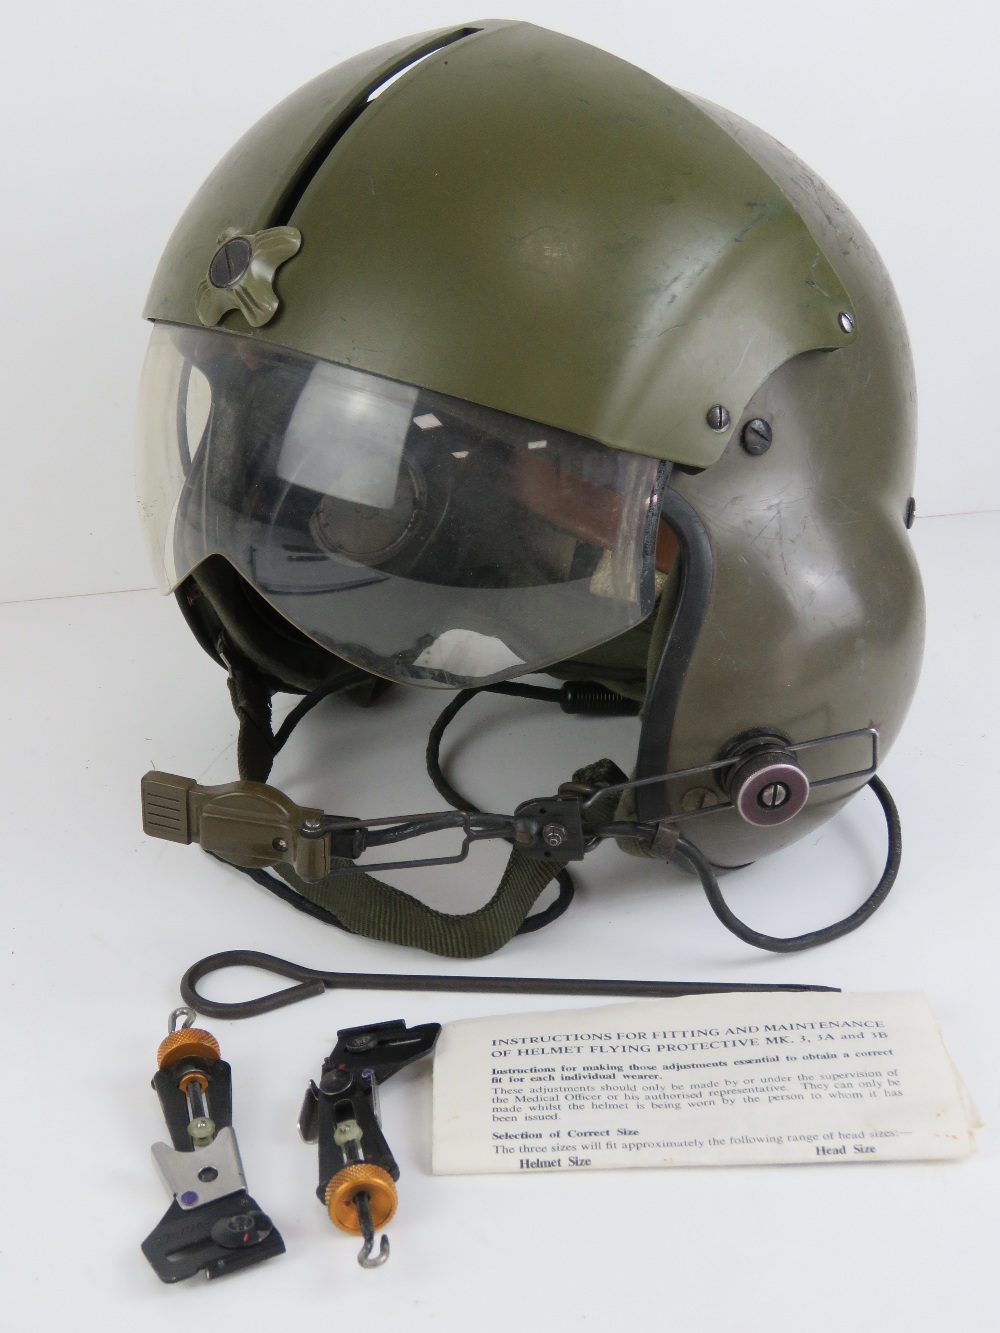 A 1971 Gentex US Pilots helmet in box with instructions.